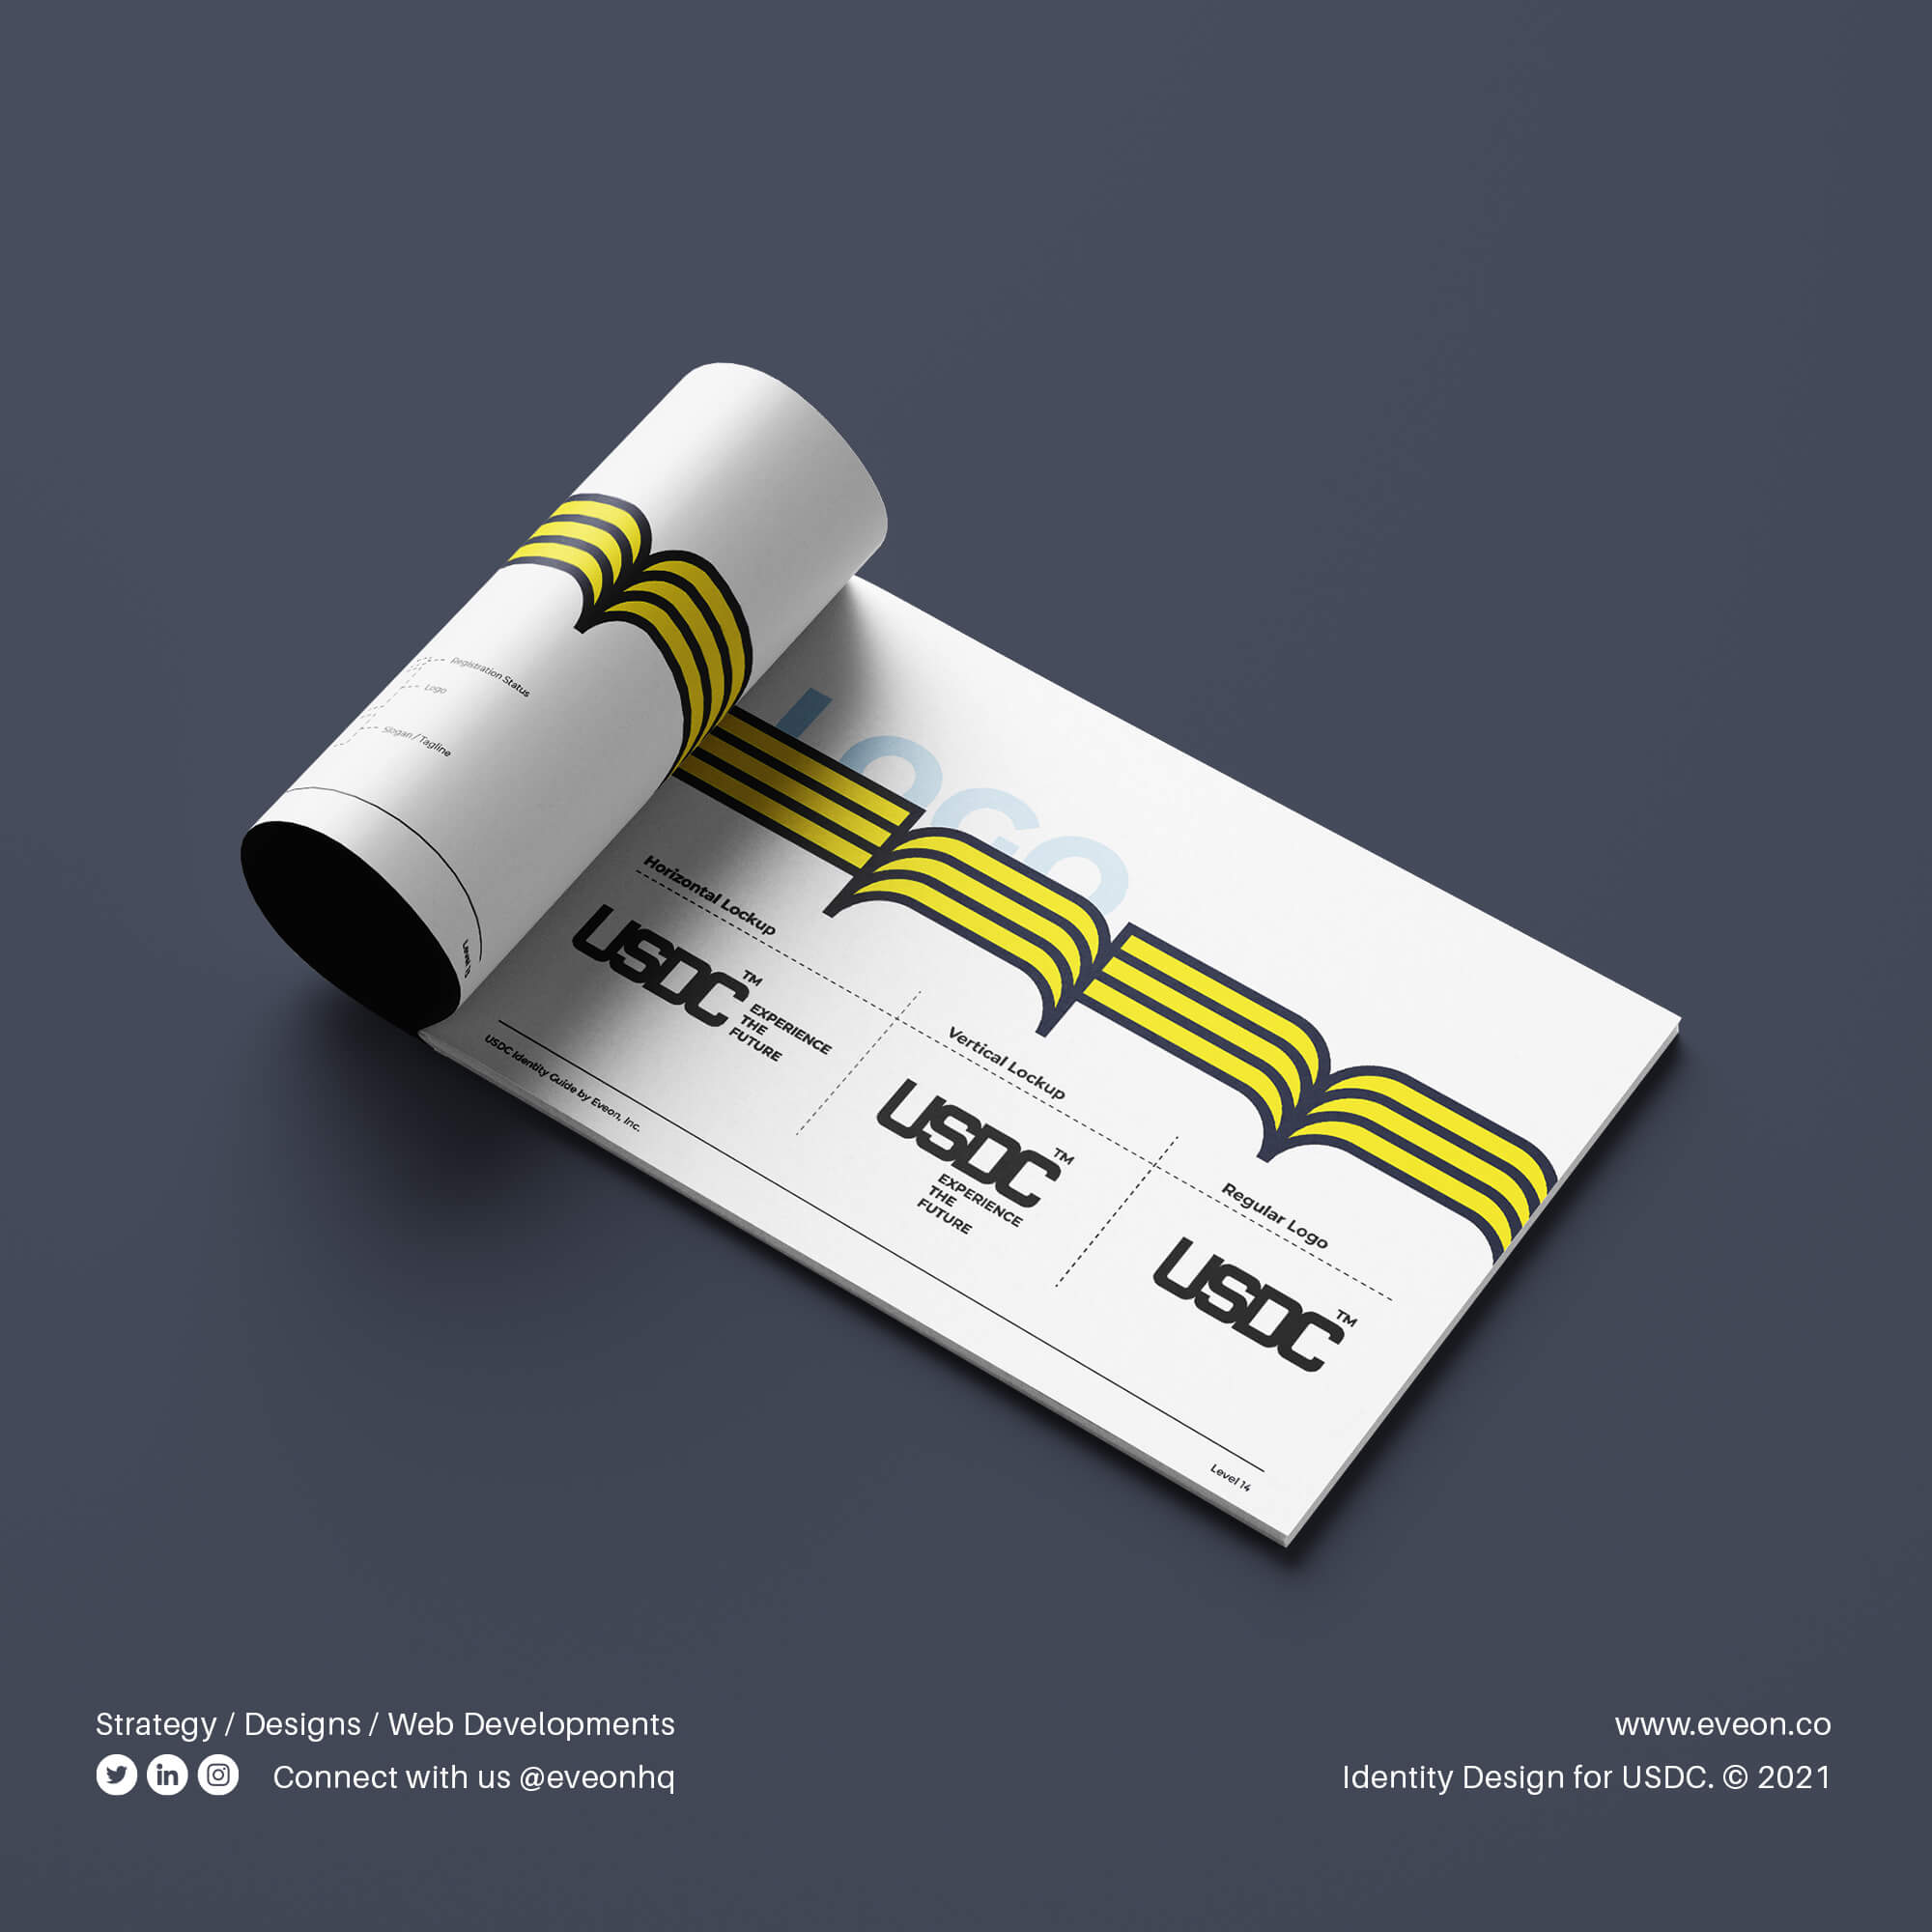 usdc brand manual